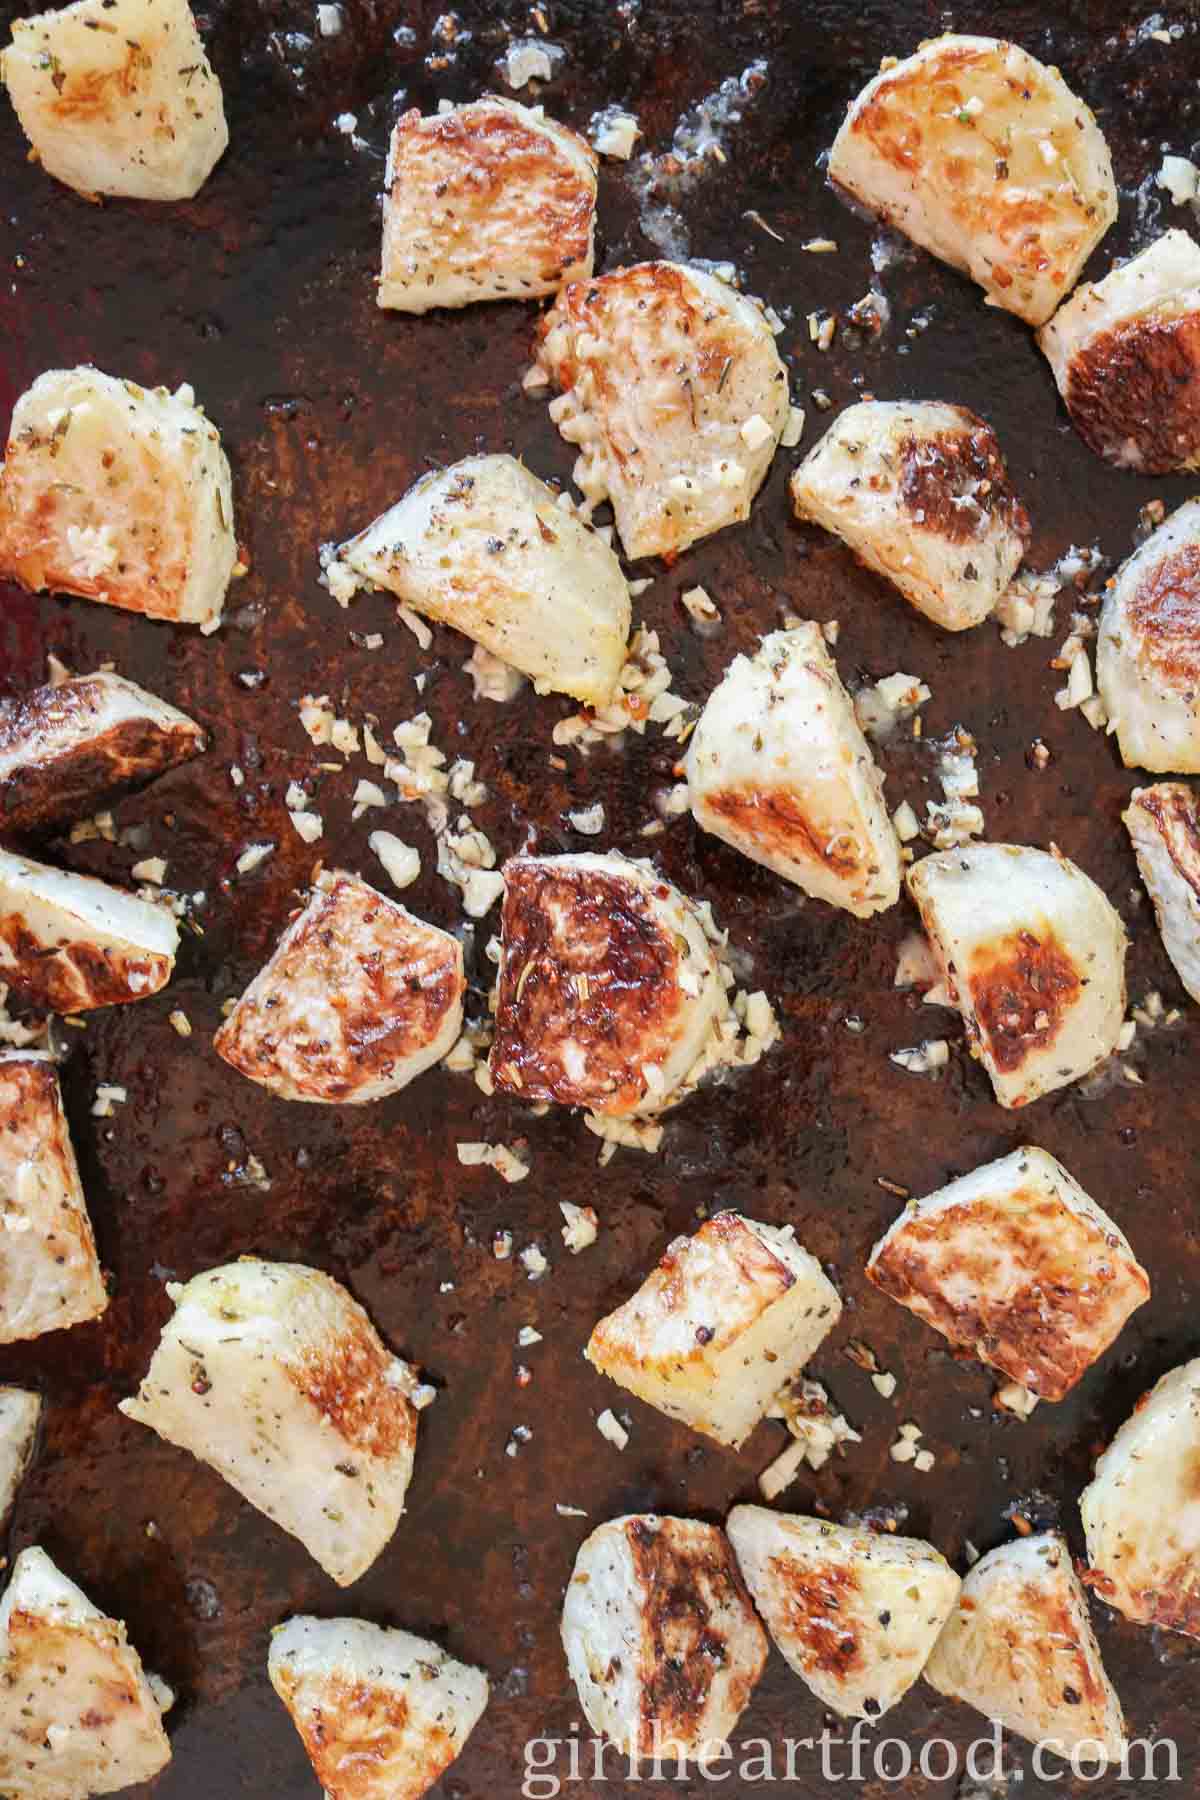 Chunks of roasted kohlrabi on a sheet pan.